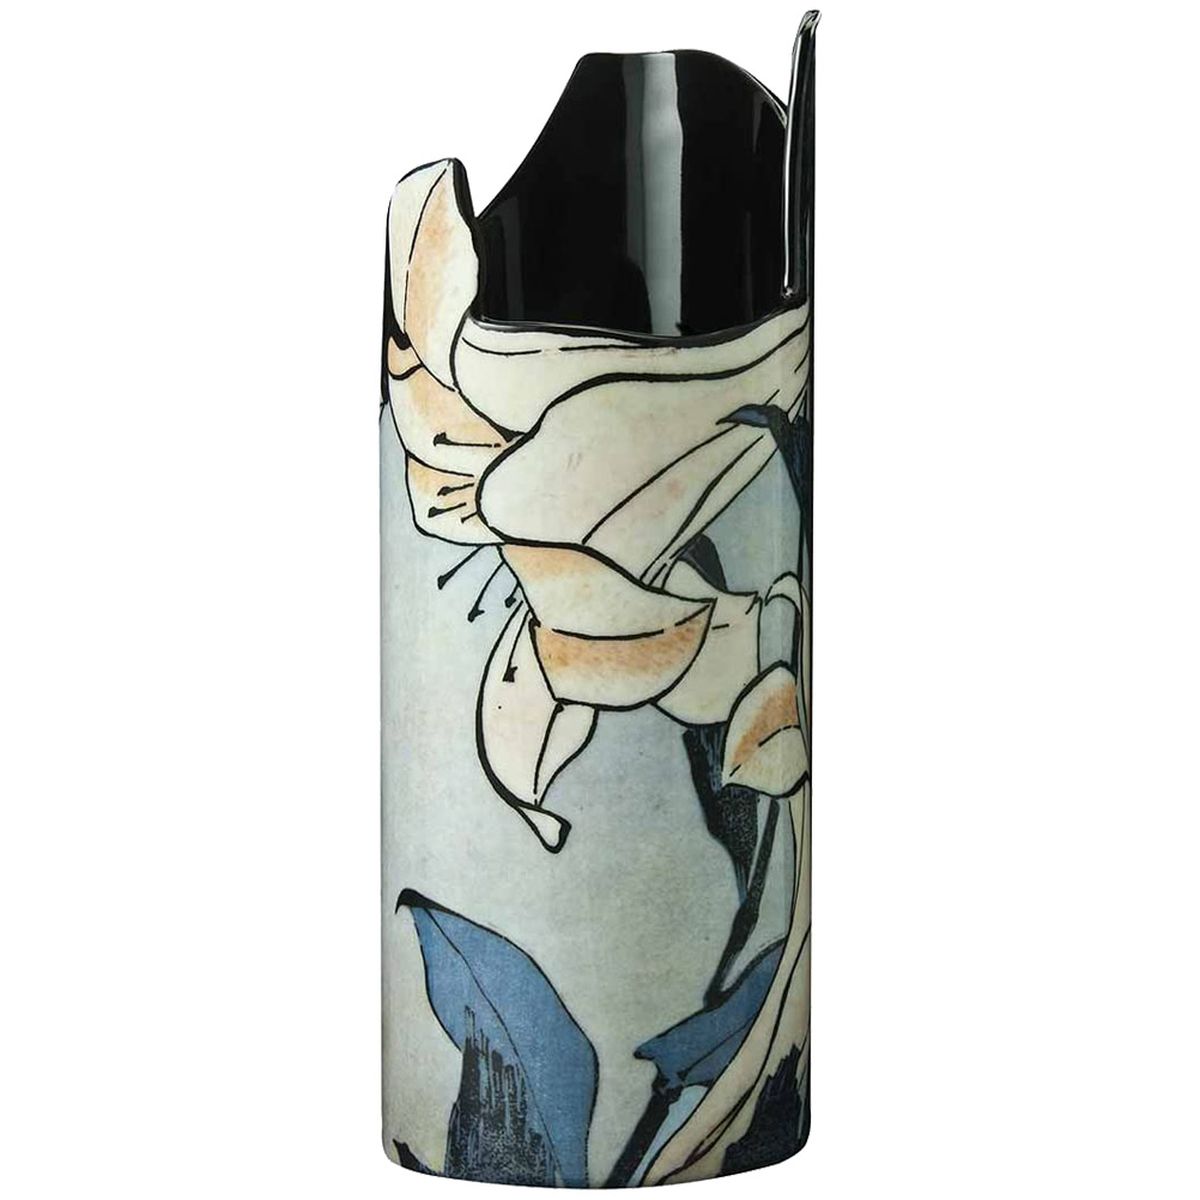 Hokusa silhouette ceramic vase - The lilies